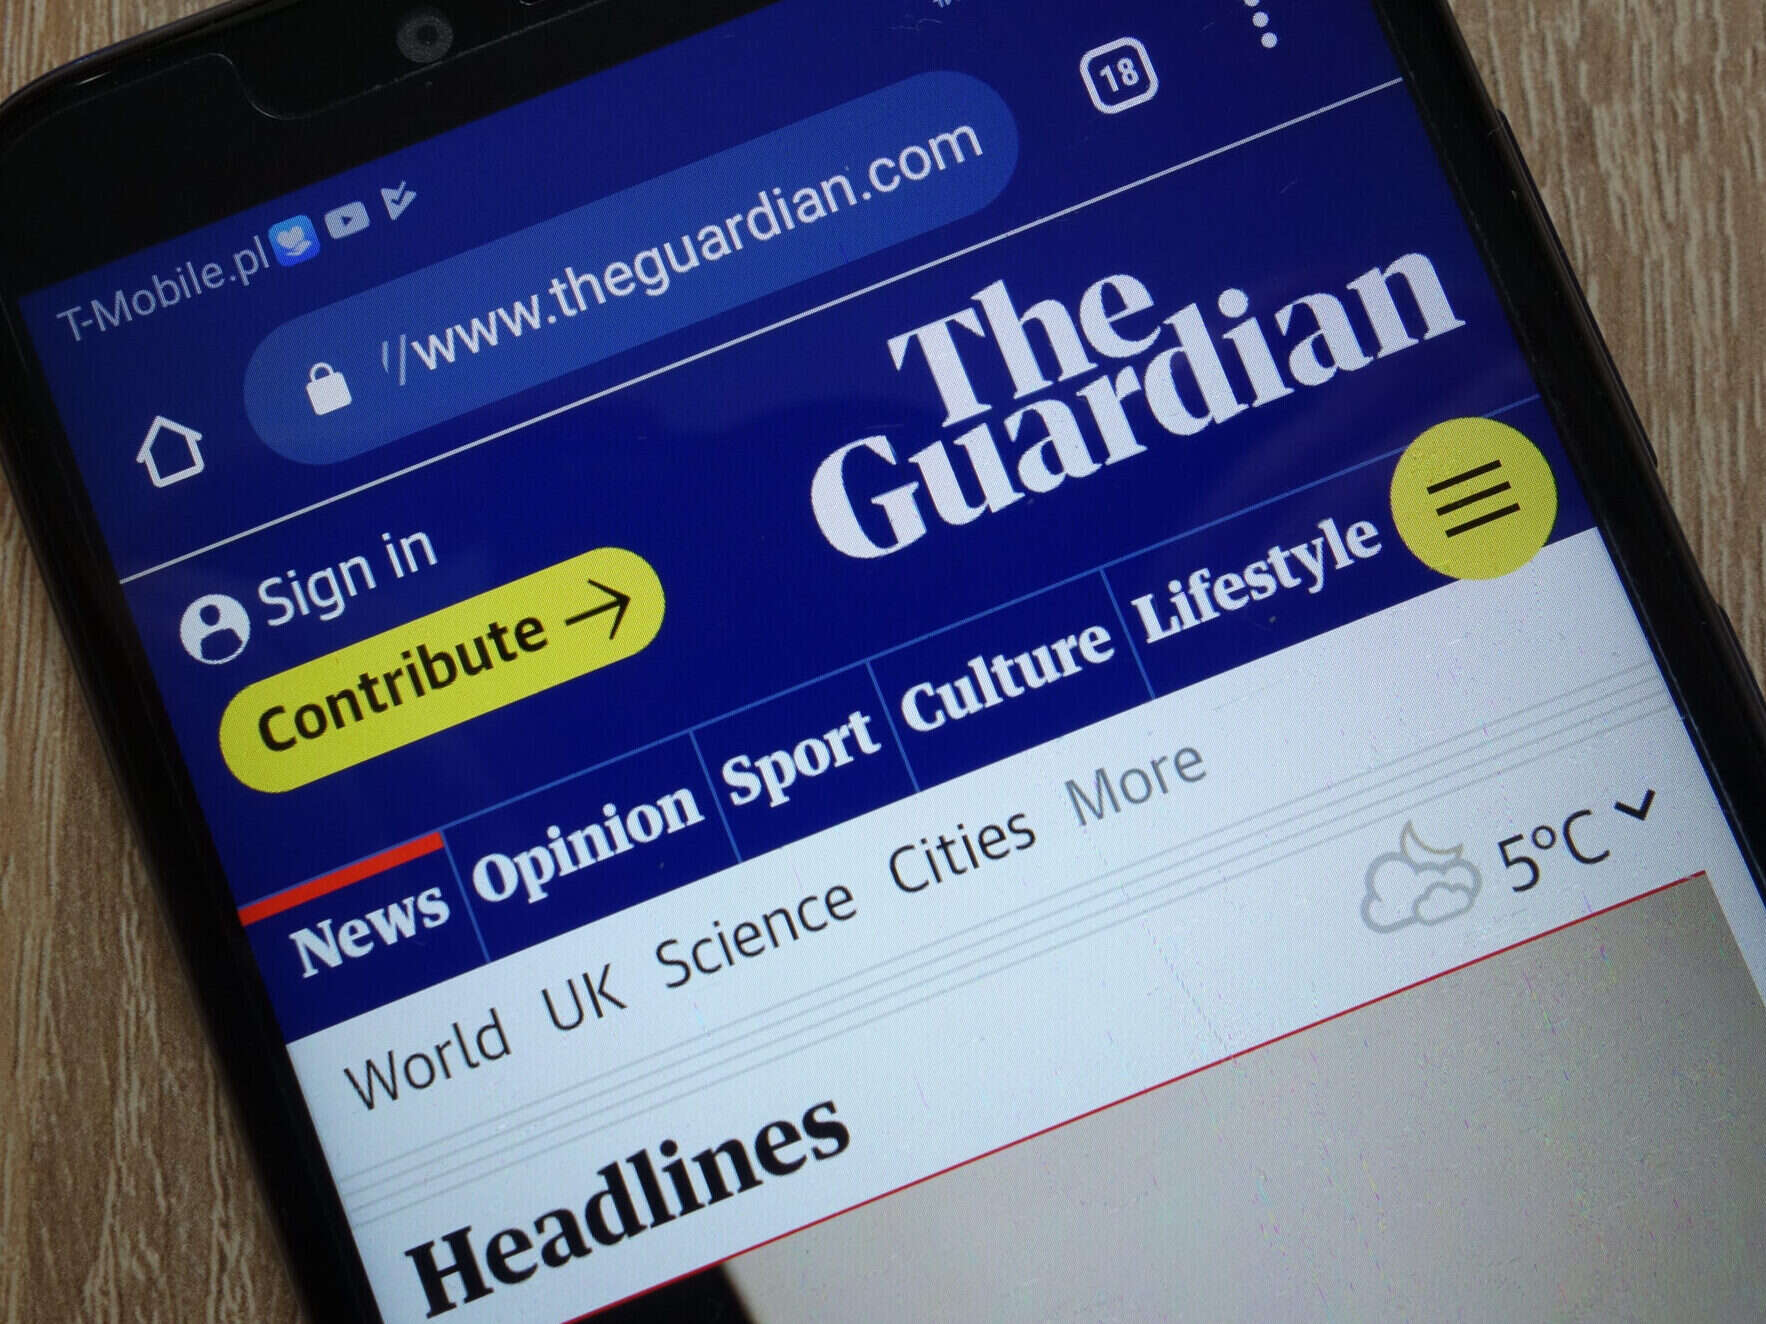 The Guardian website